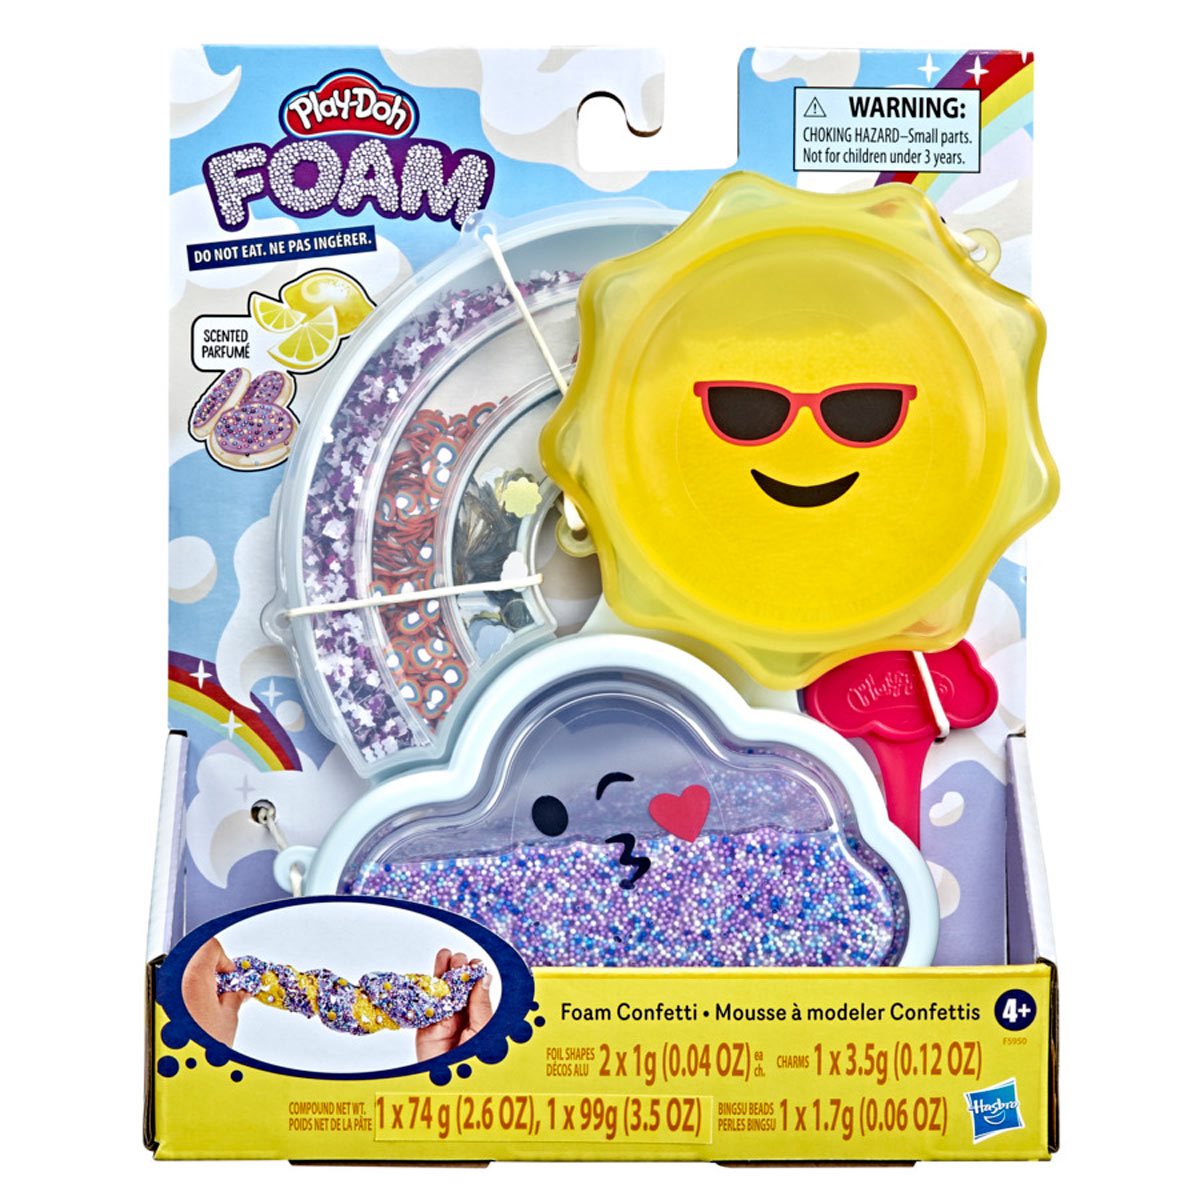 Play-Doh Starter Set - Entertainment Earth